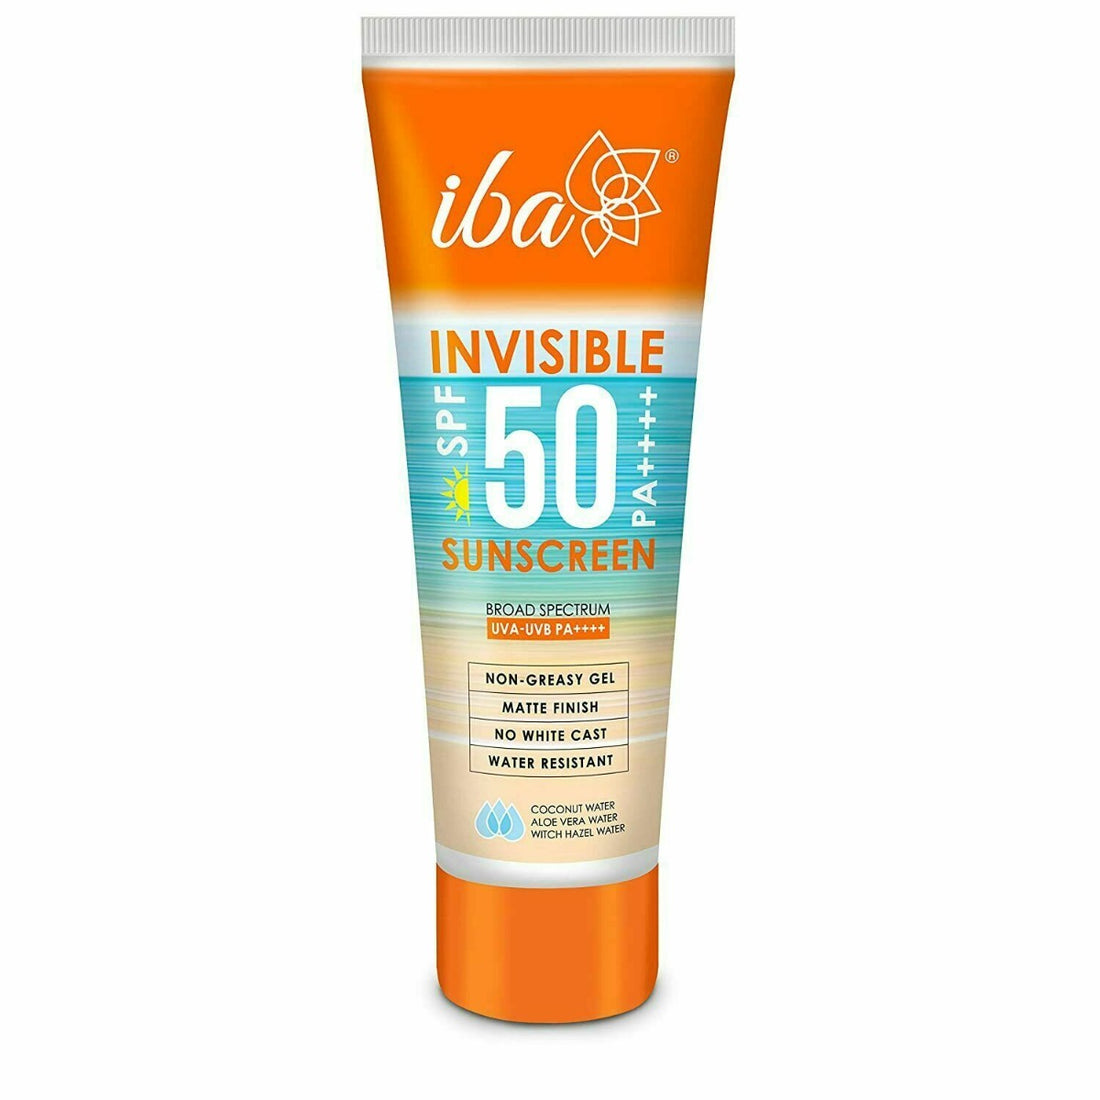 Iba Invisible Sunscreen SPF 50 (80gm)